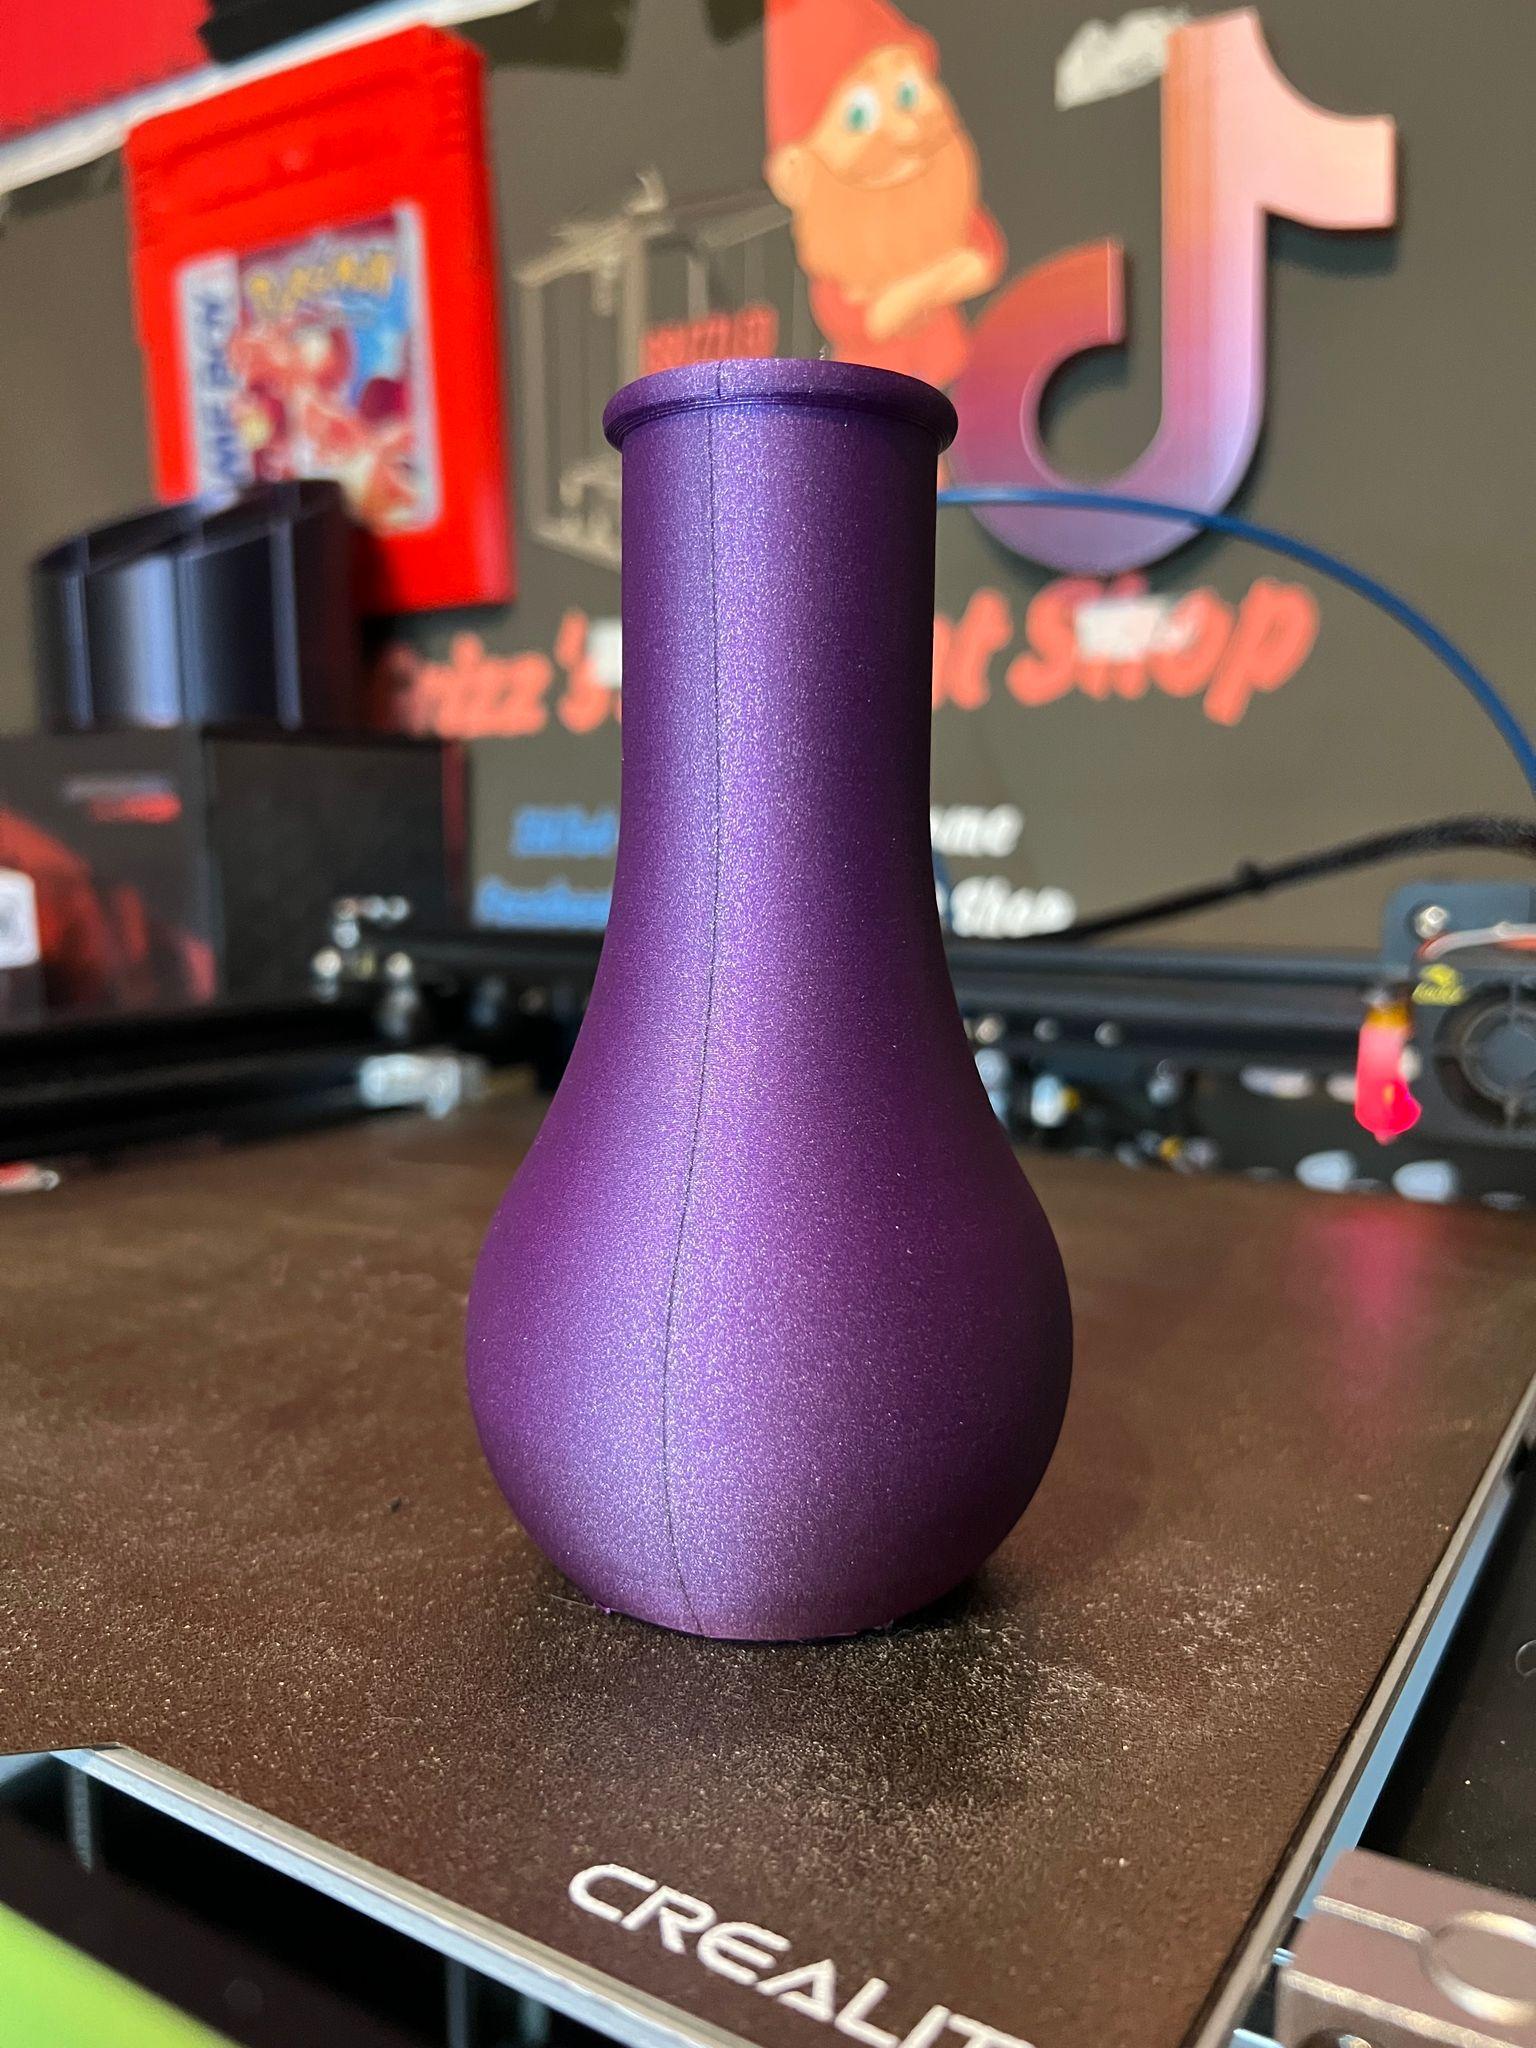 Simple vase - Print in place 3d model